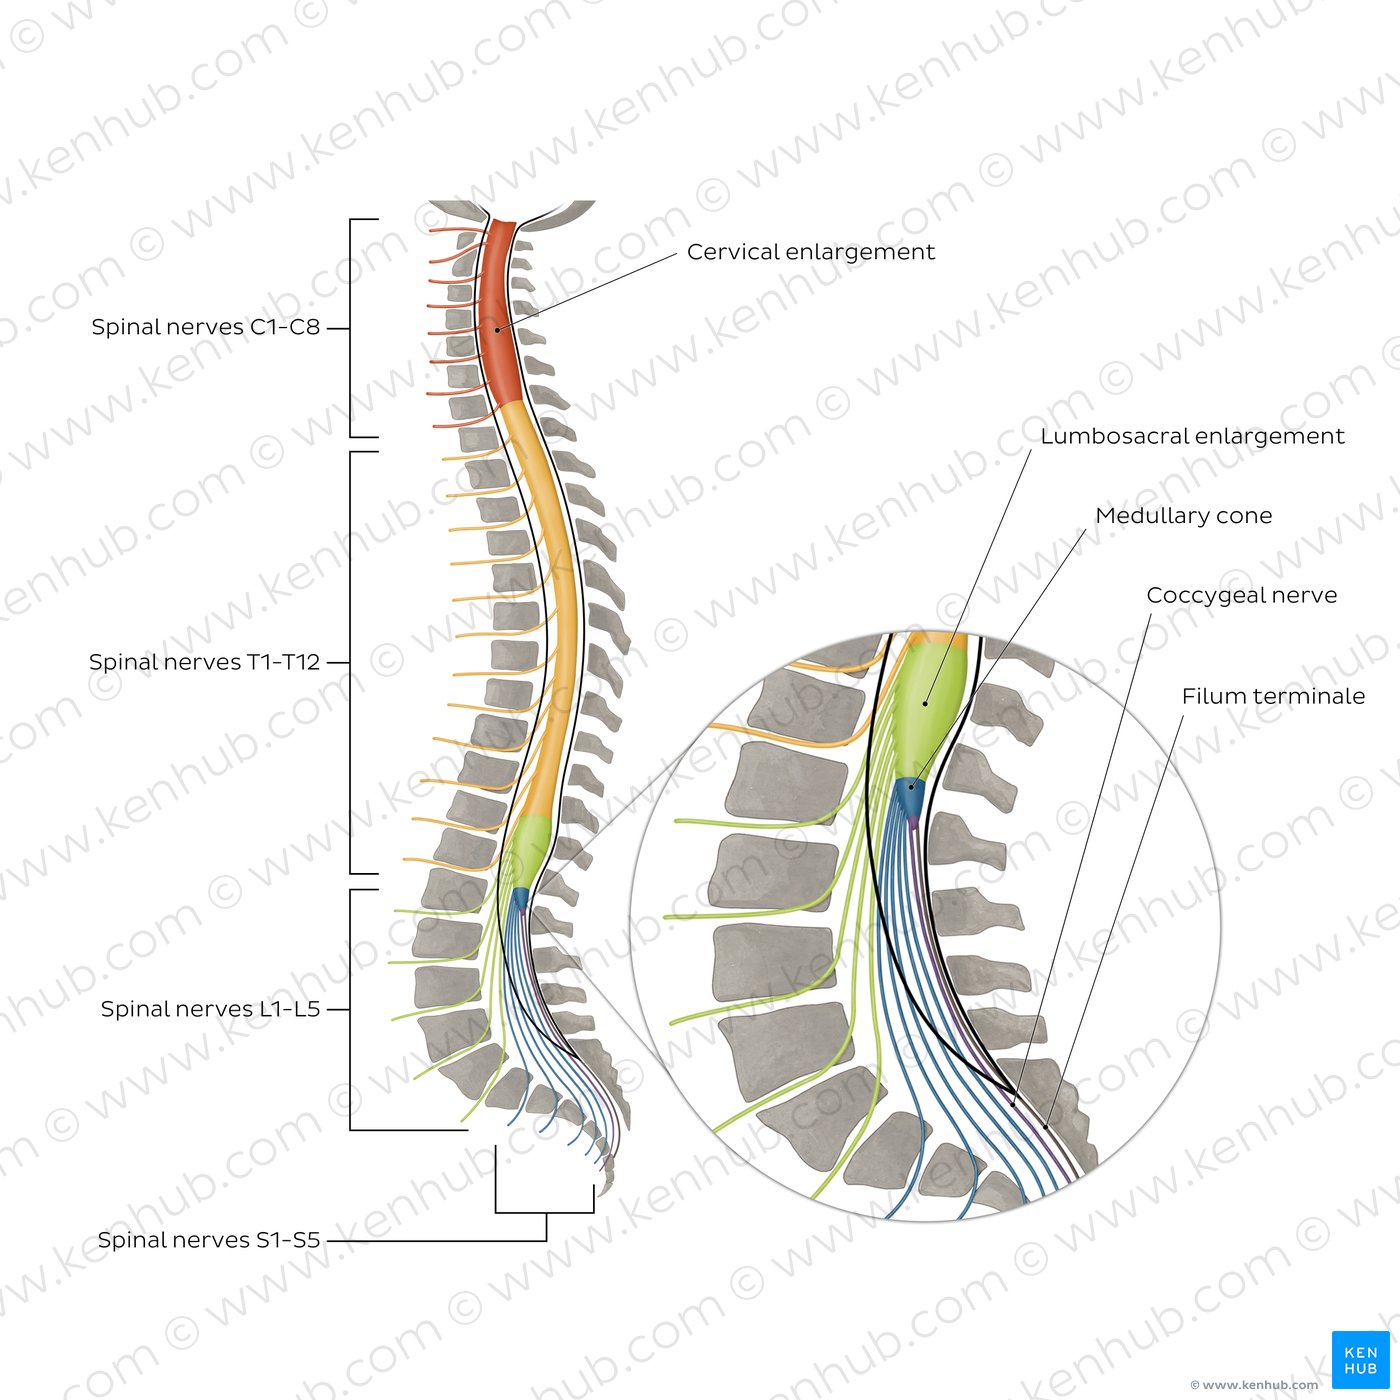 Vertebral column and spinal nerves